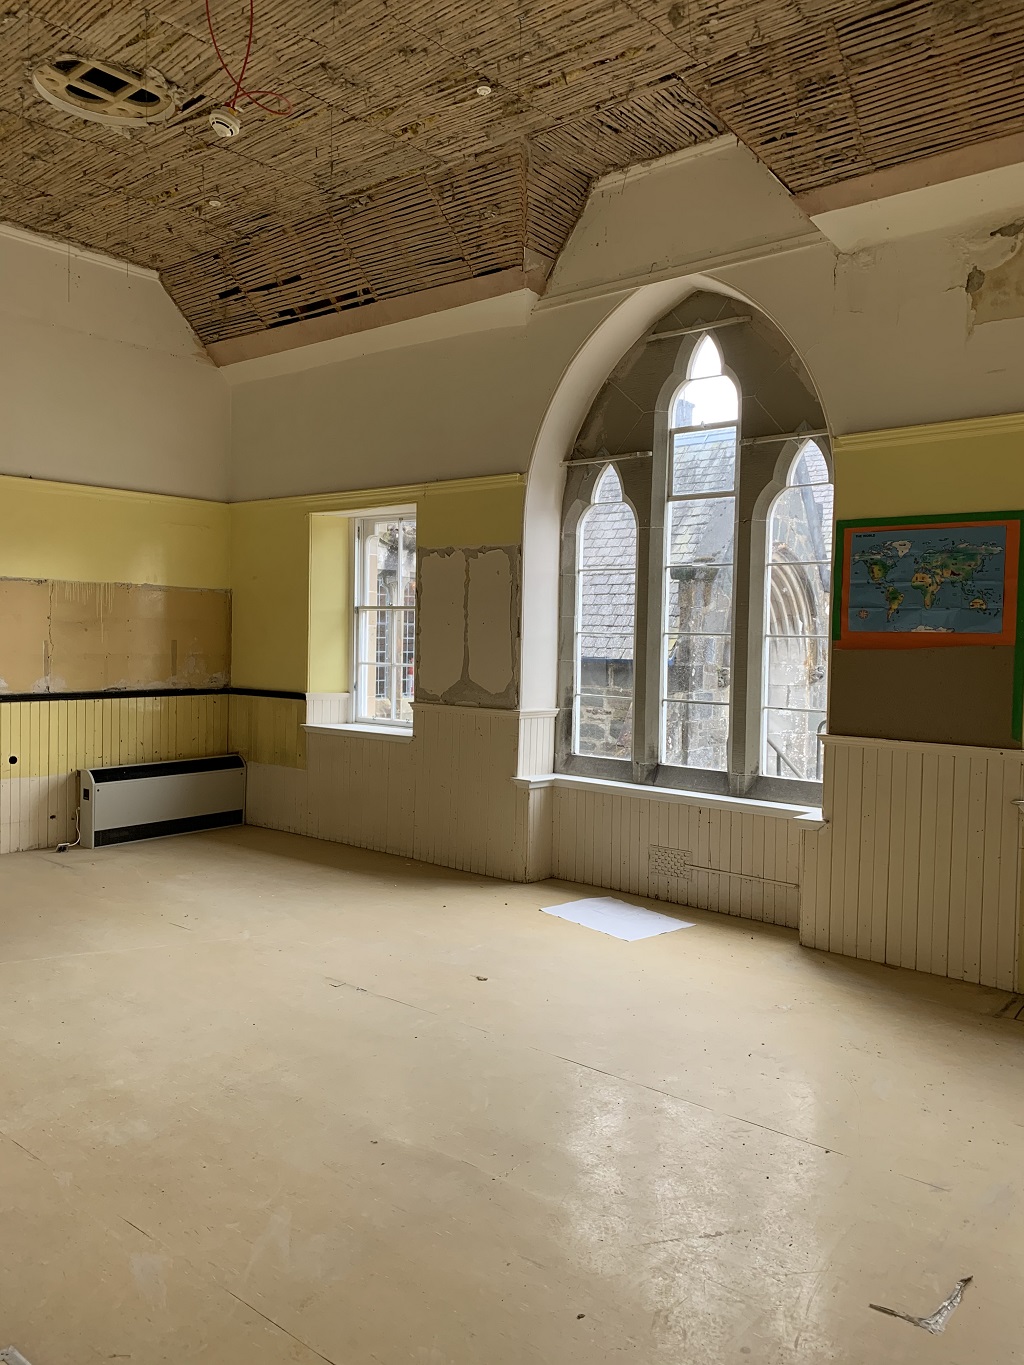 akp wins £1.2m Aberfoyle Primary School refurbishment